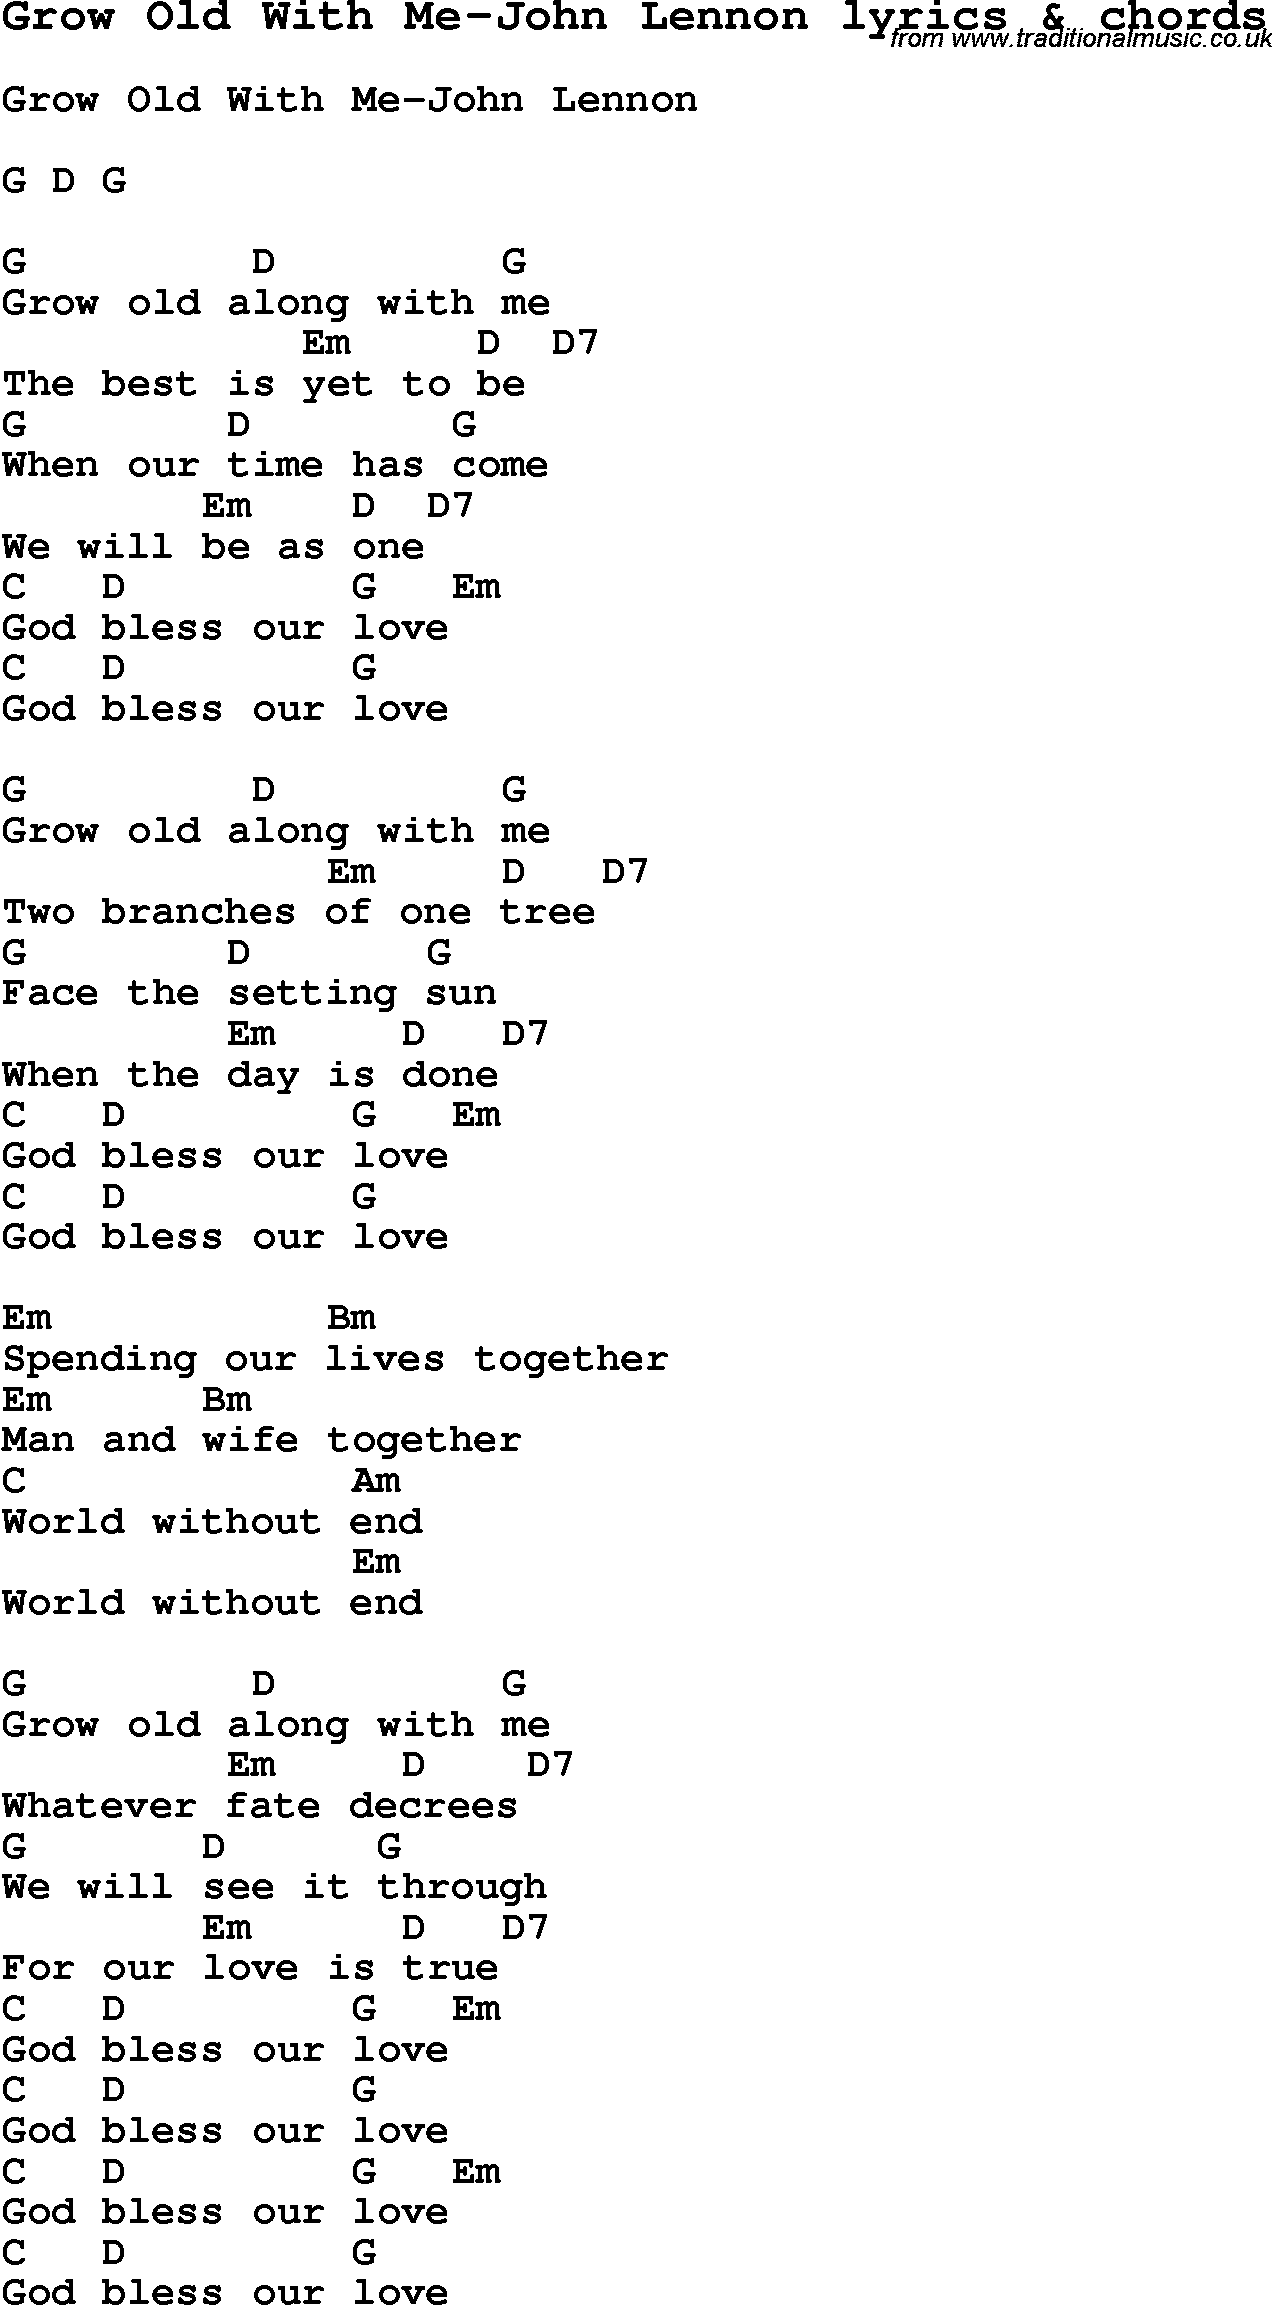 Love Song Lyrics for: Grow Old With Me-John Lennon with chords for Ukulele, Guitar Banjo etc.